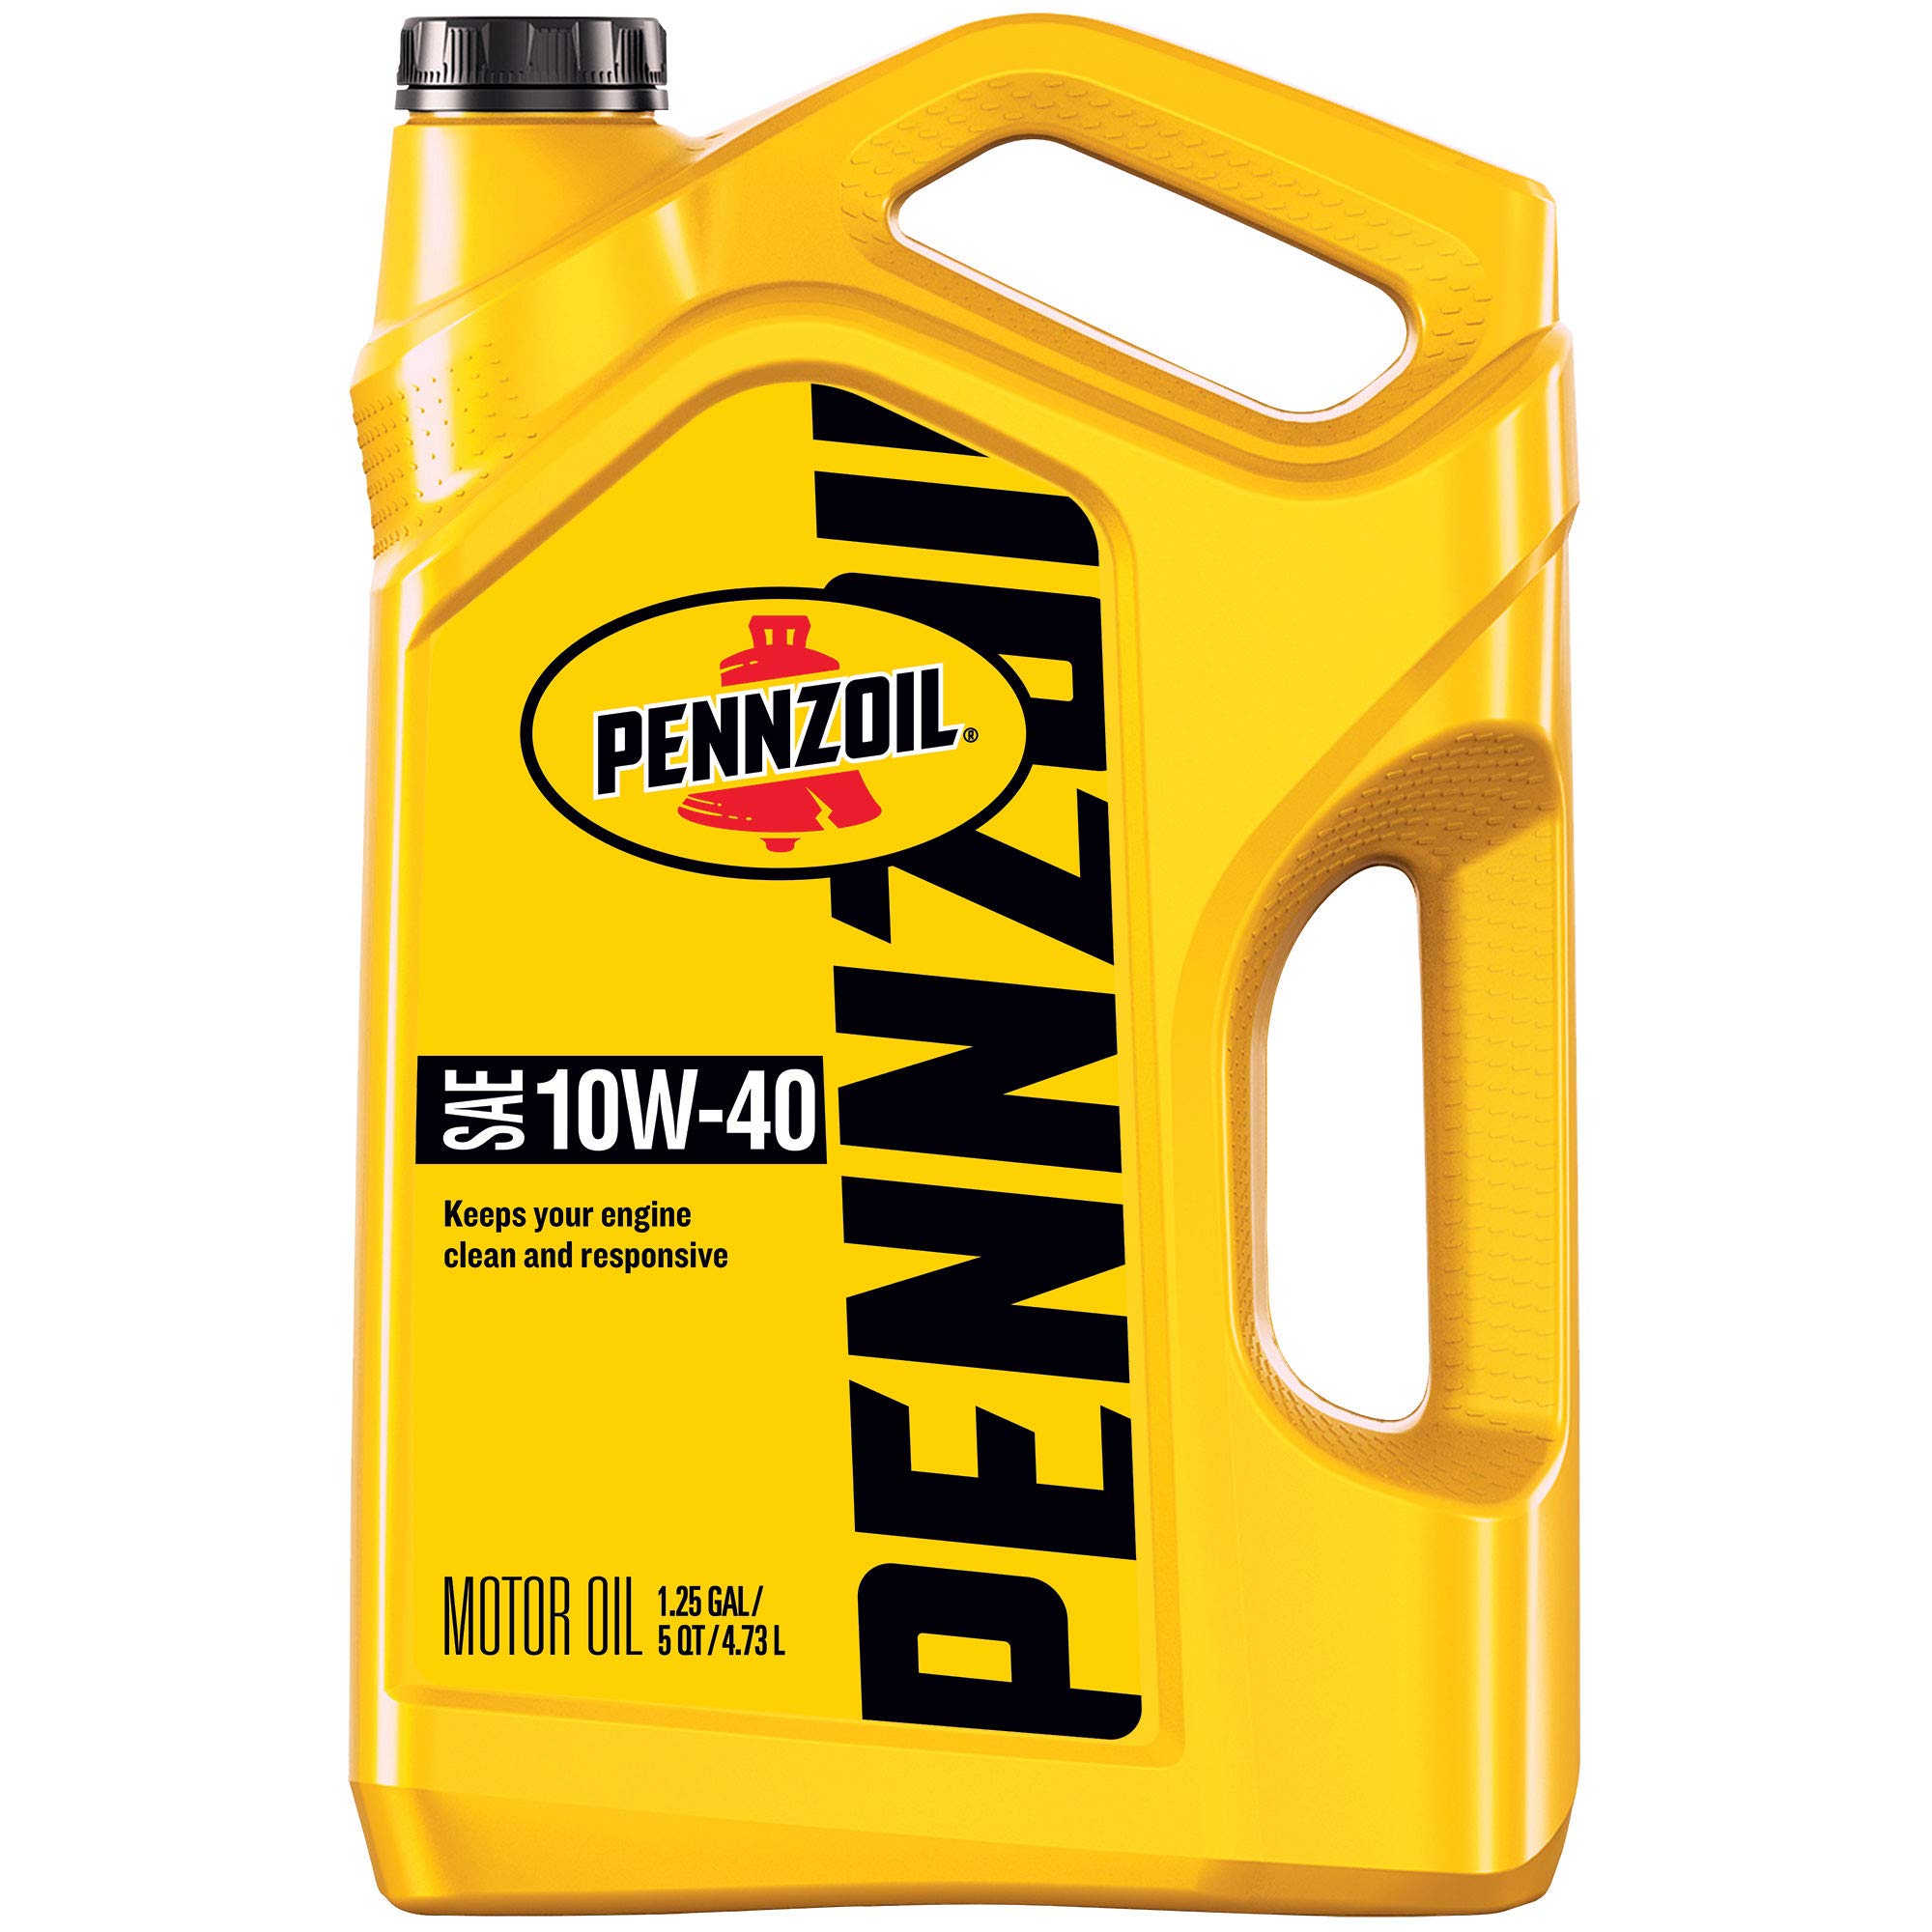 Pennzoil Conventional 10W-40 Motor Oil (1-Quart, Case Of 3)